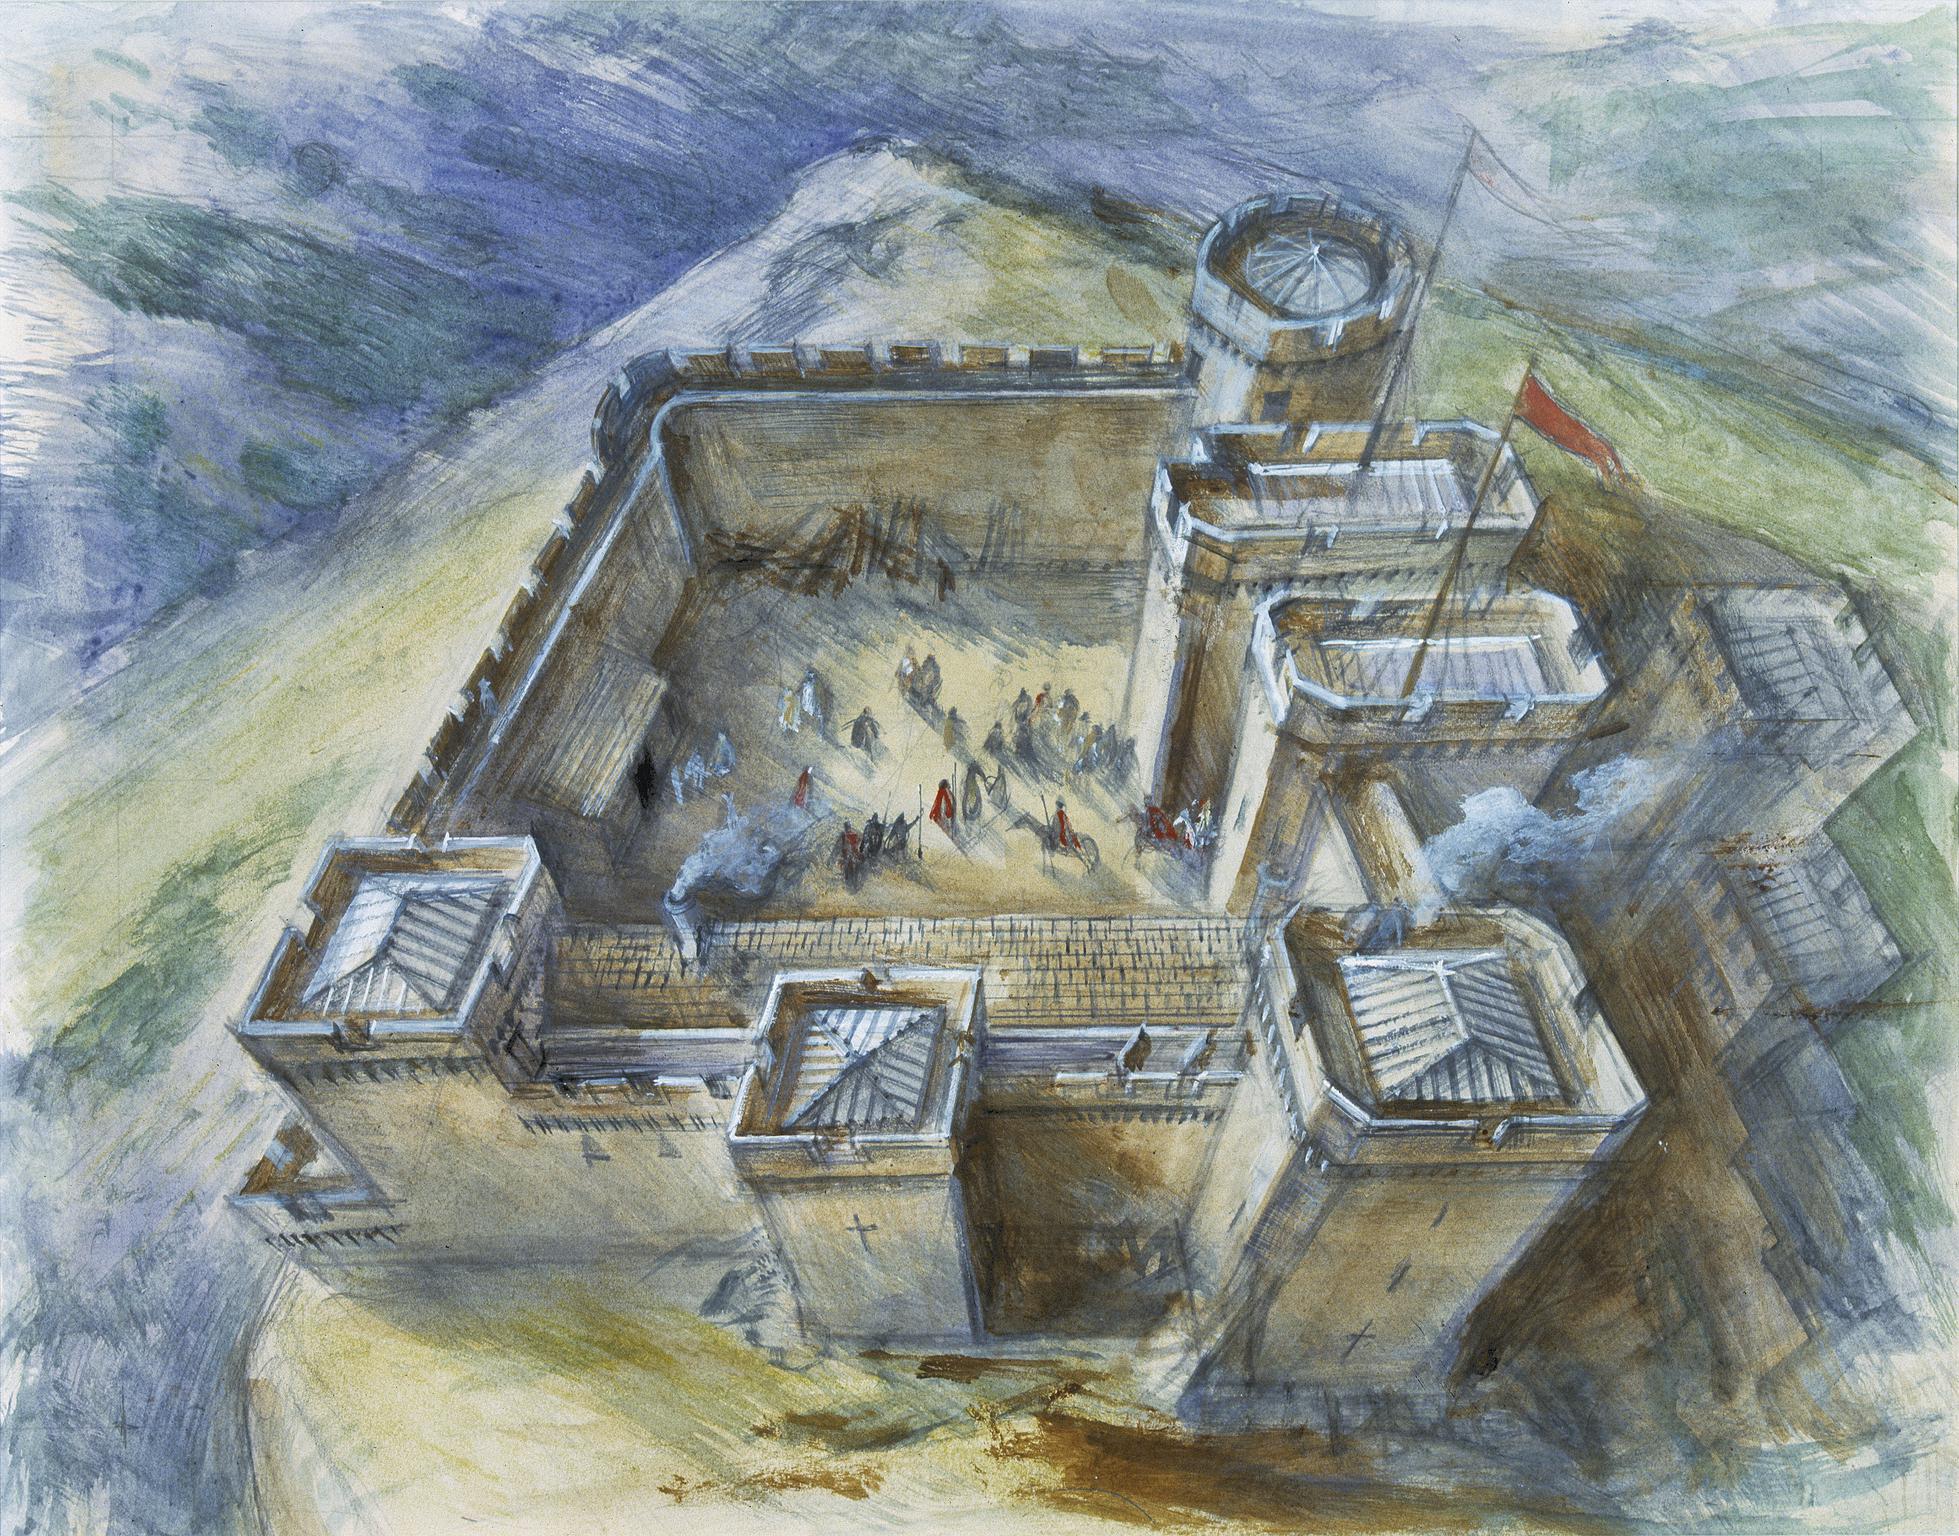 Watercolour of Carreg Cennen Castle